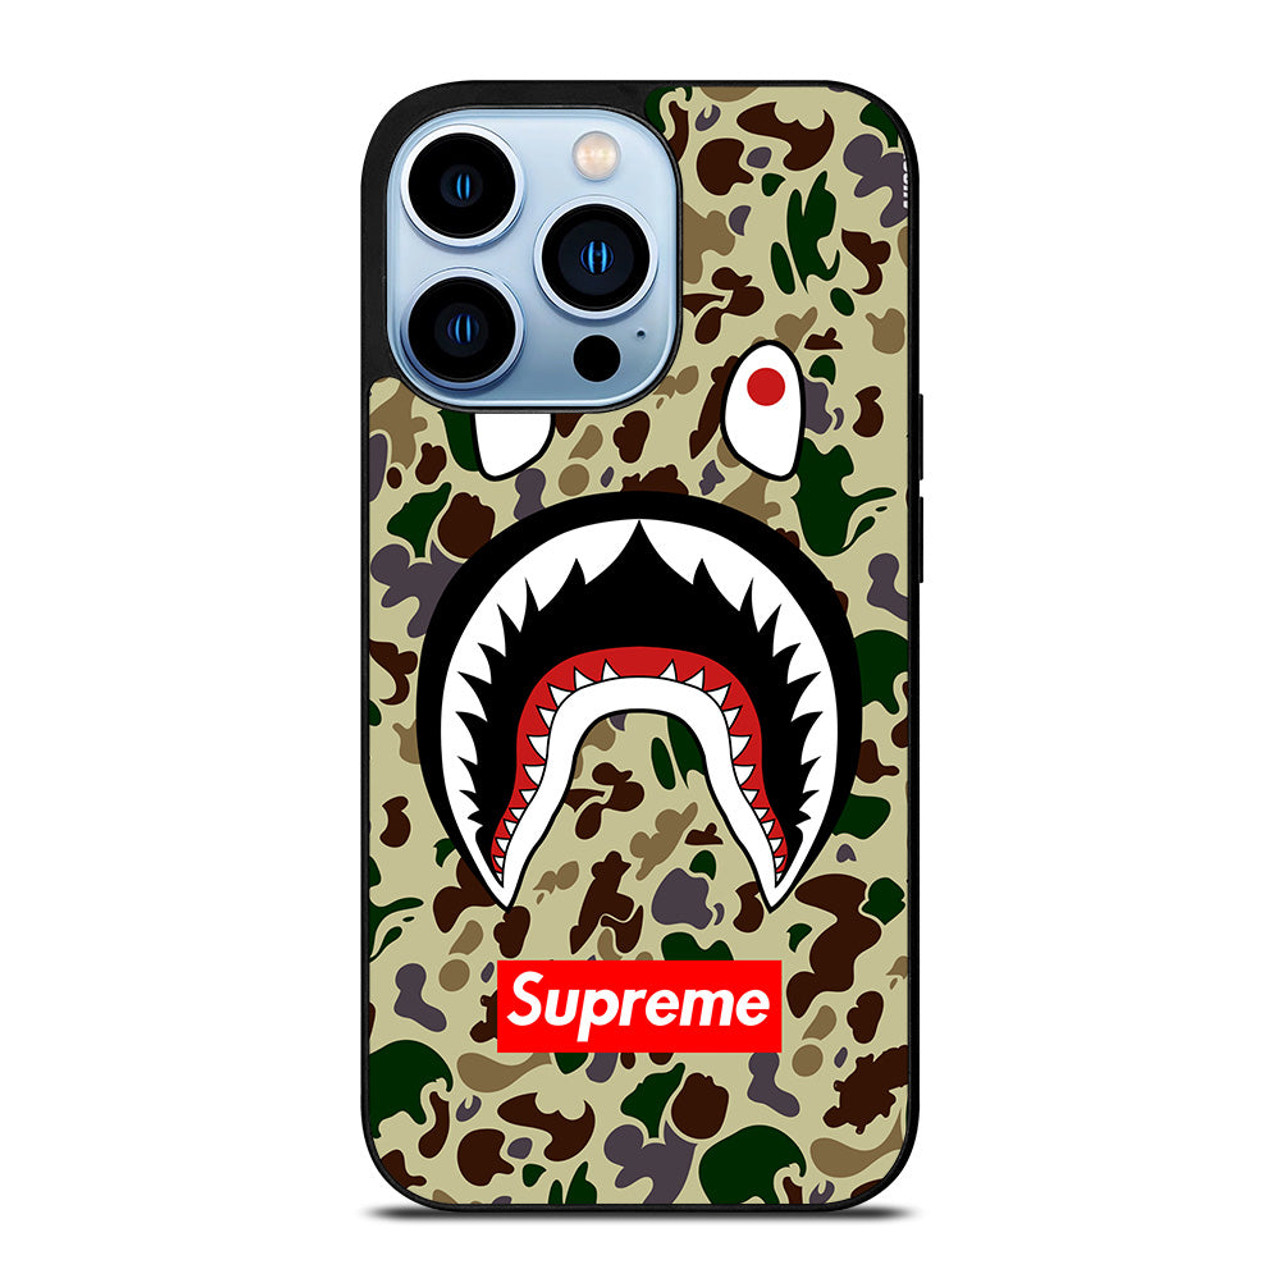 supreme iphone 13